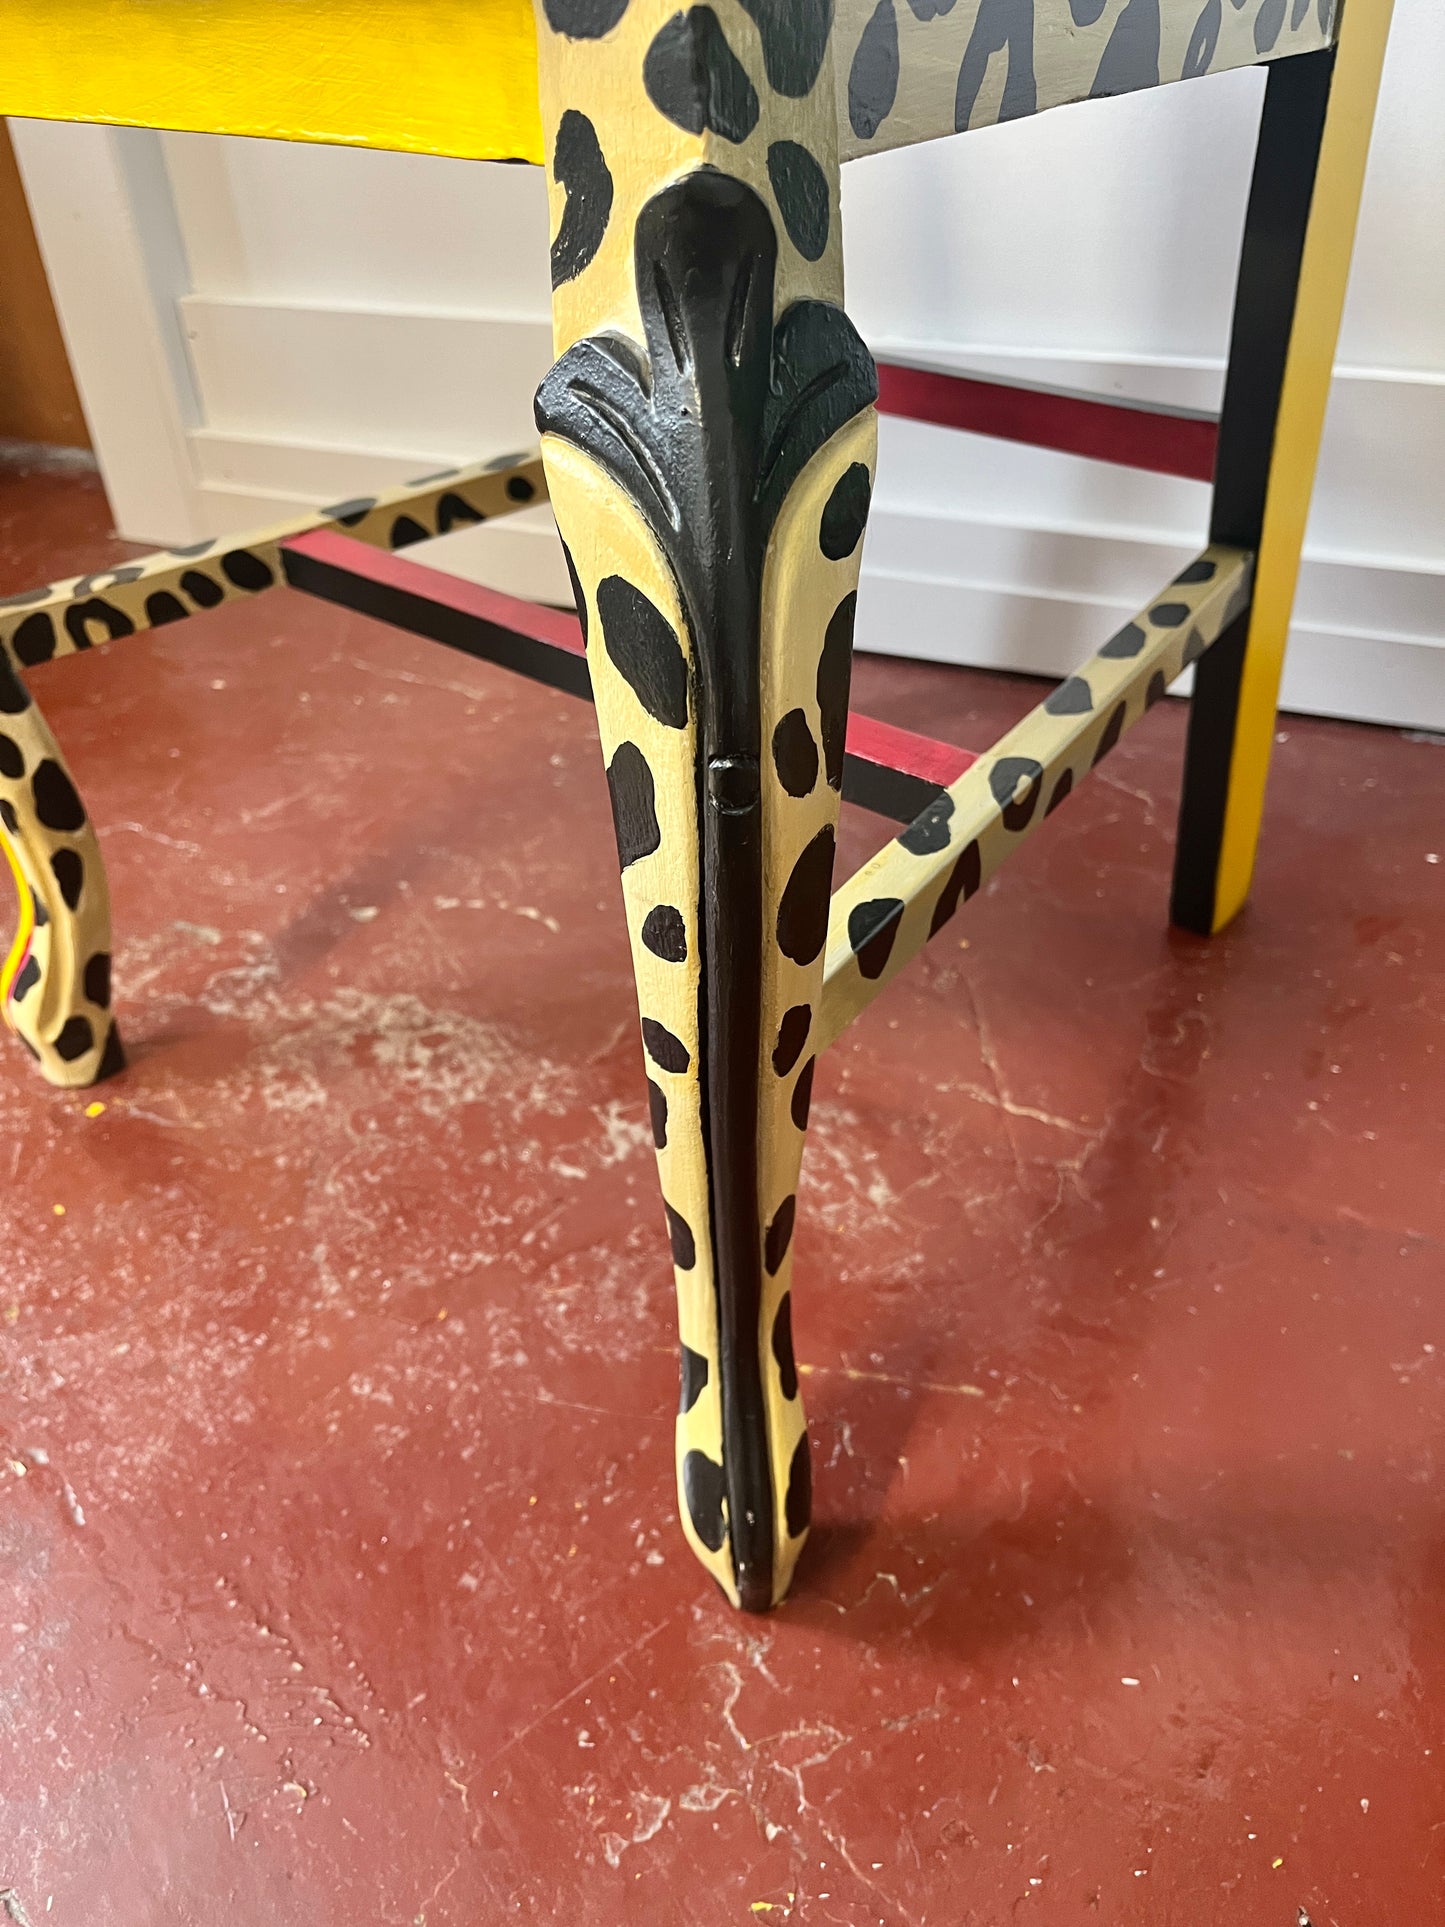 Artist-signed Handpainted Cheetah Face Wooden Chair